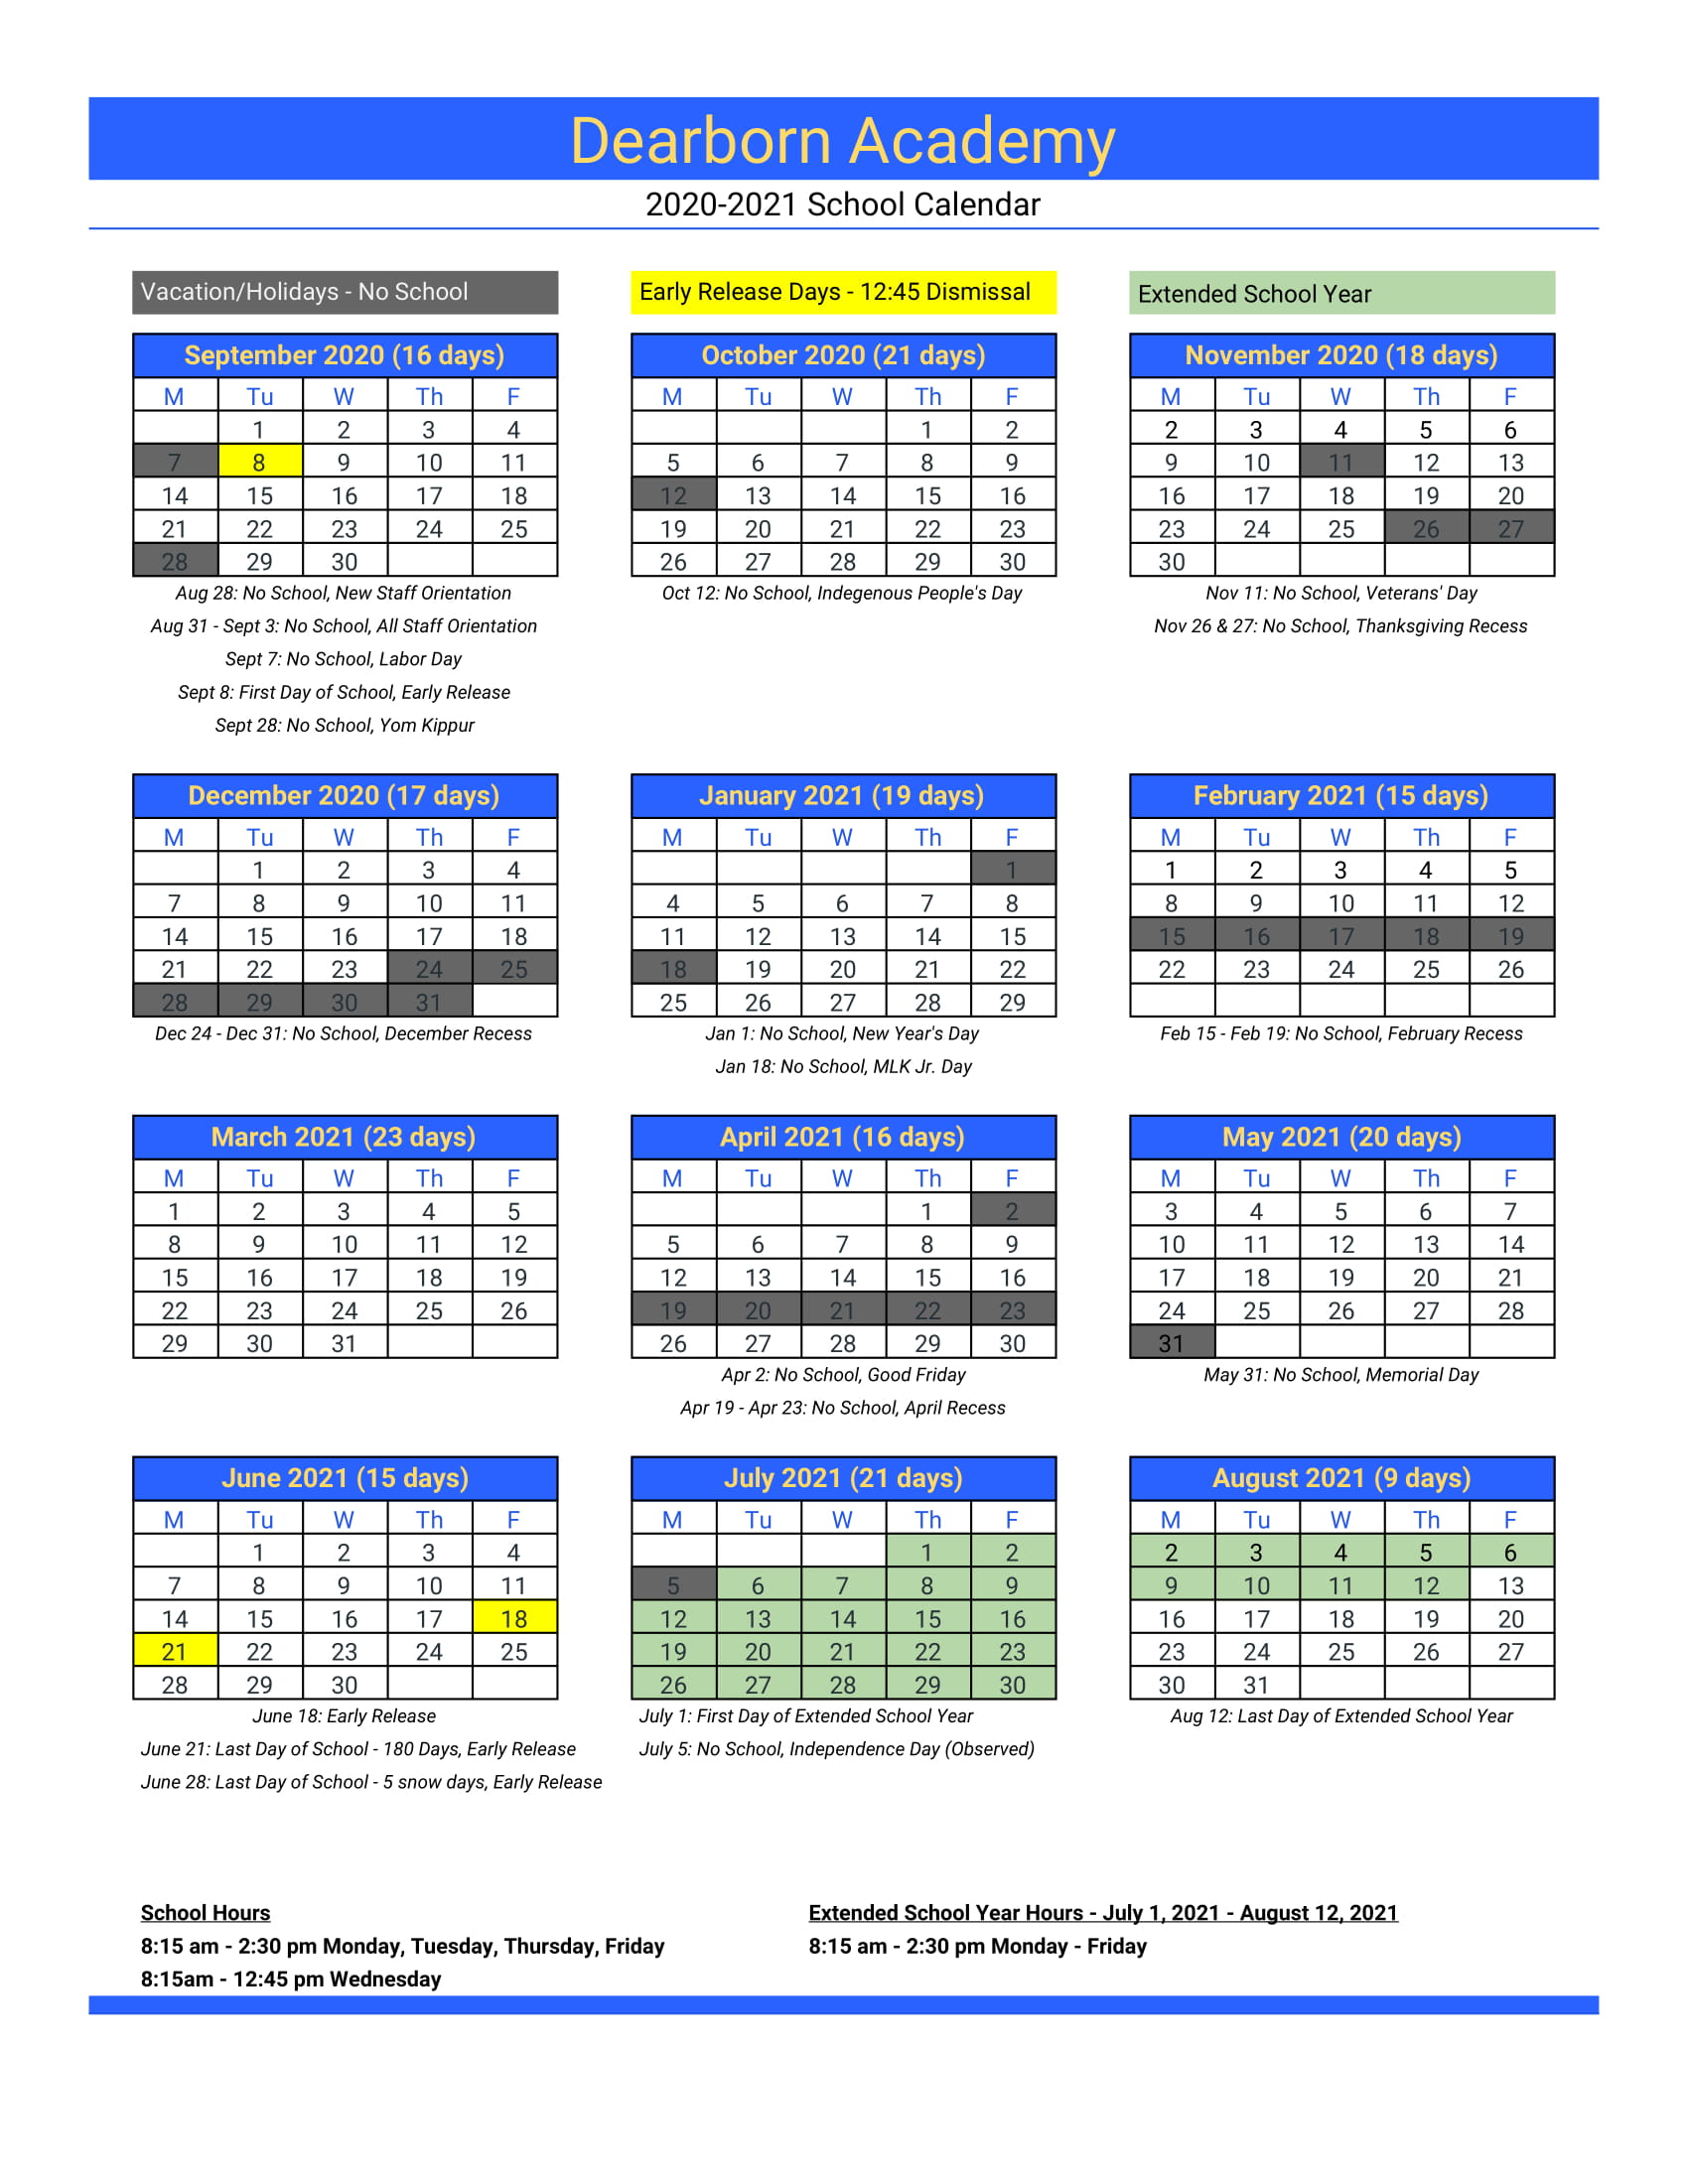 School Calendar Dearborn Academy